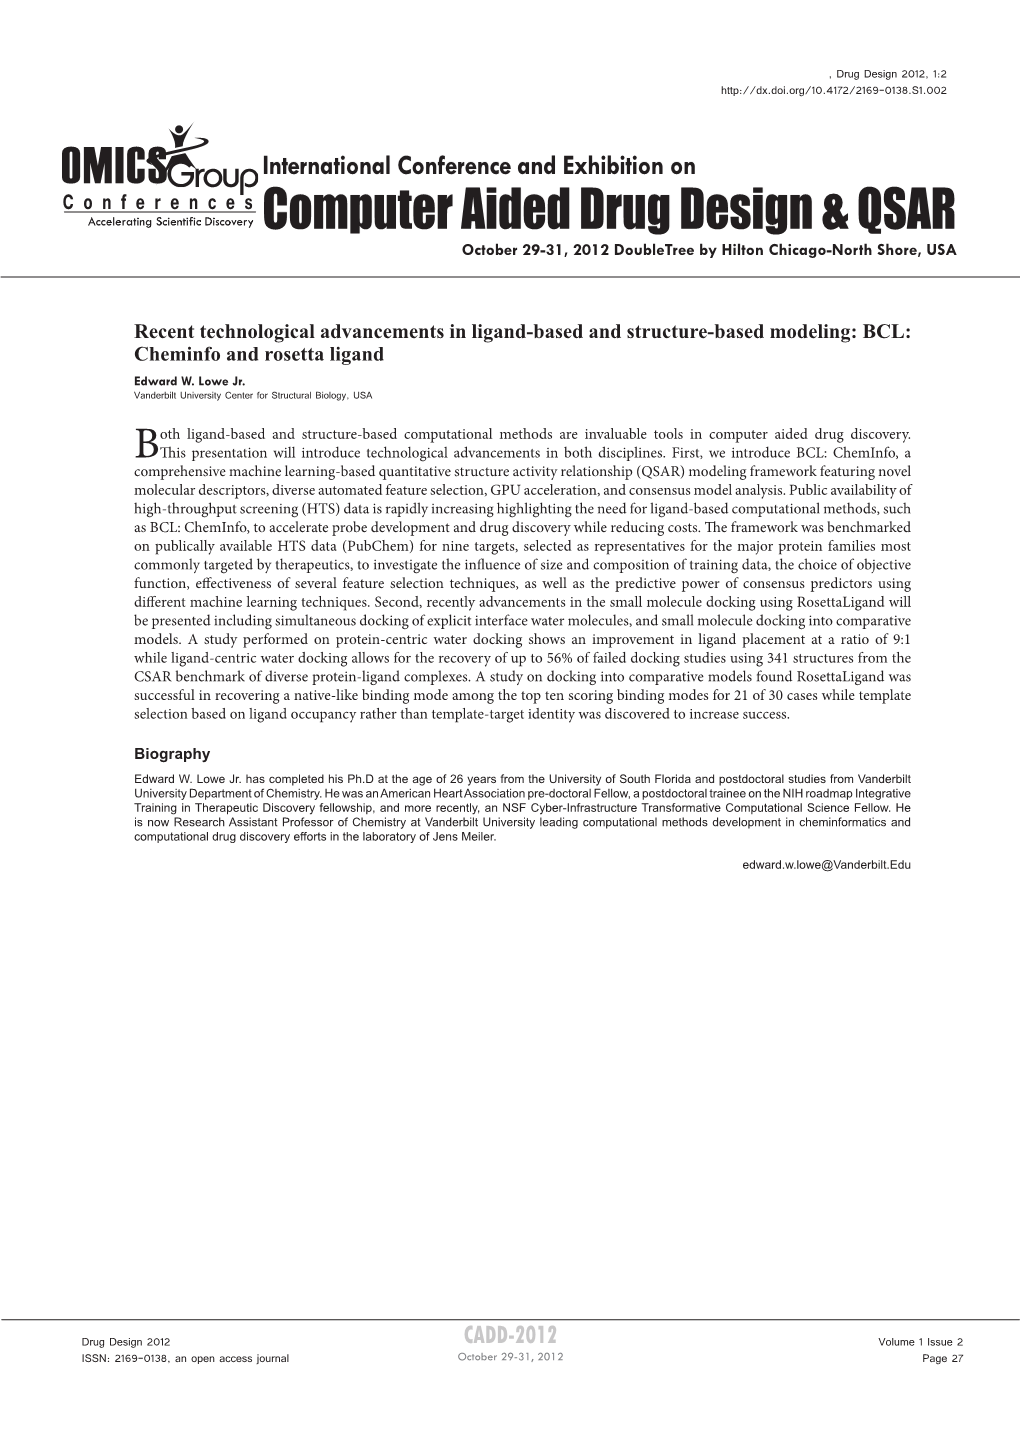 Computer Aided Drug Design & QSAR